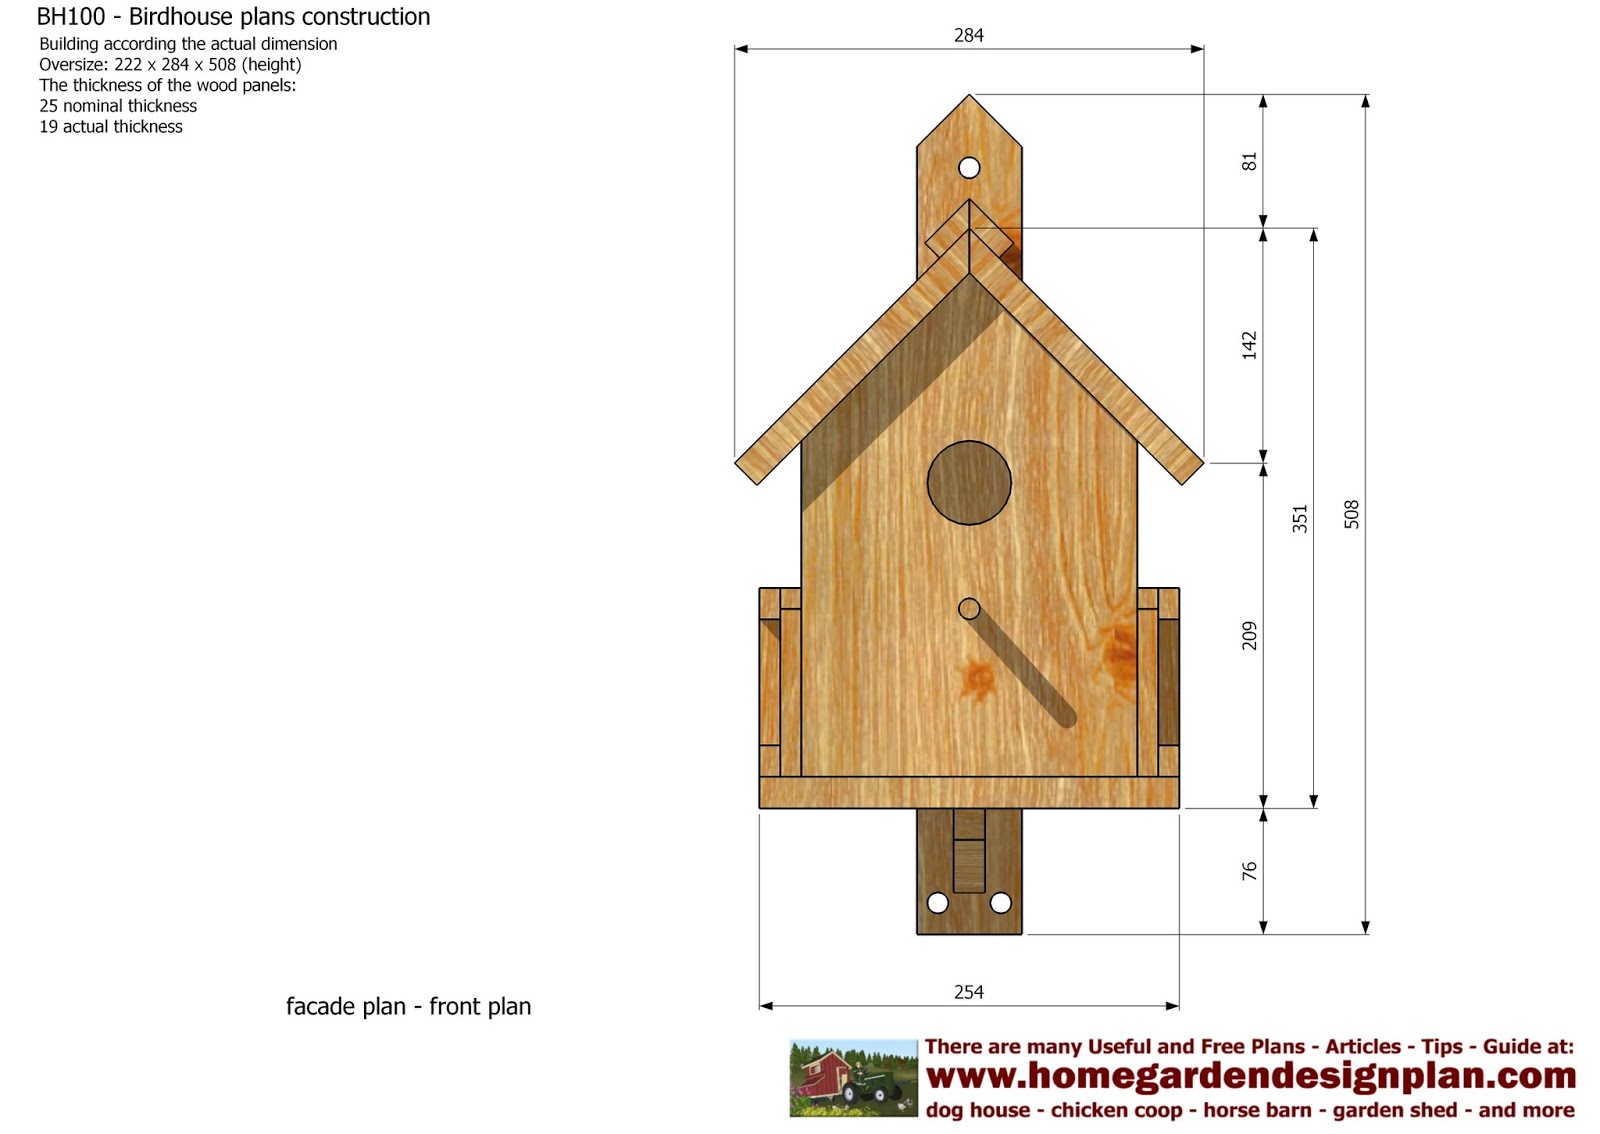 Bird+House+Building+Plans home garden plans: BH100 - Bird House Plans 